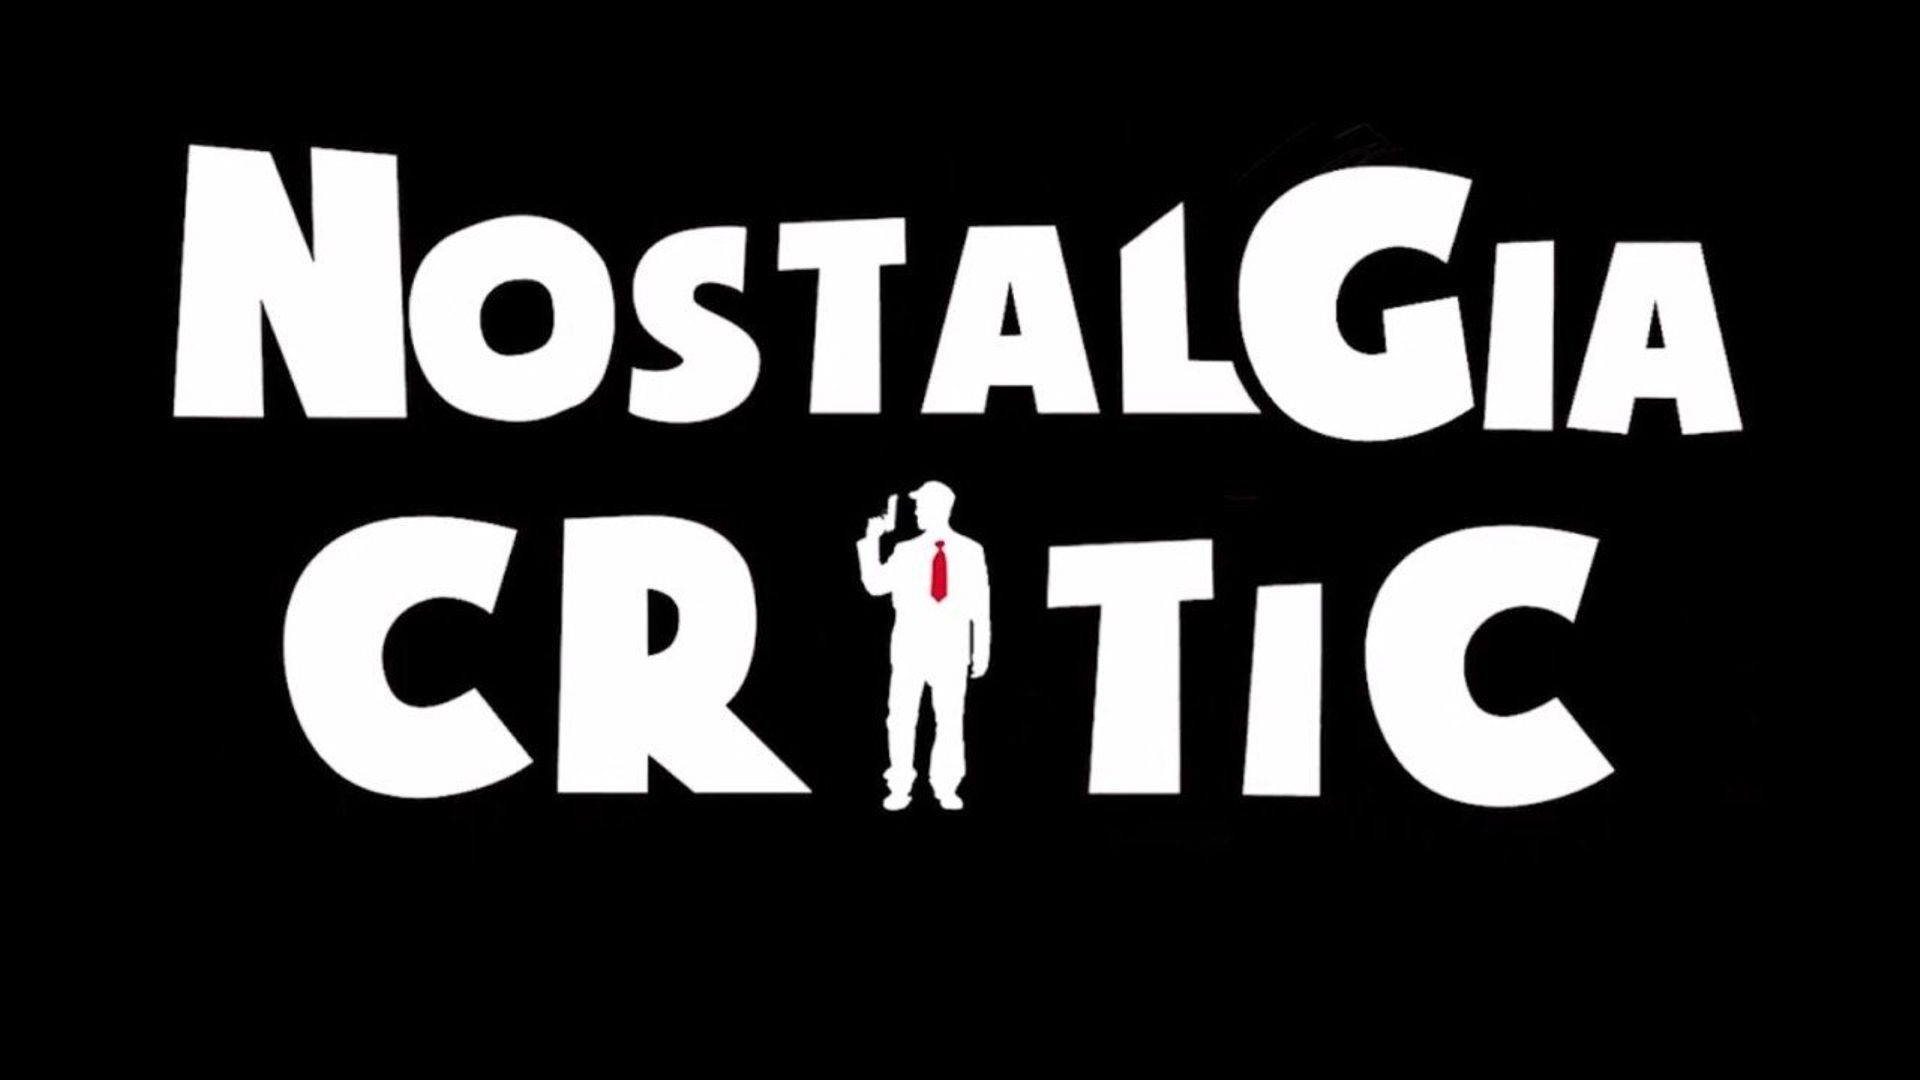 Nostalgia Critic (TV Series 2007– ) - Episode list - IMDb